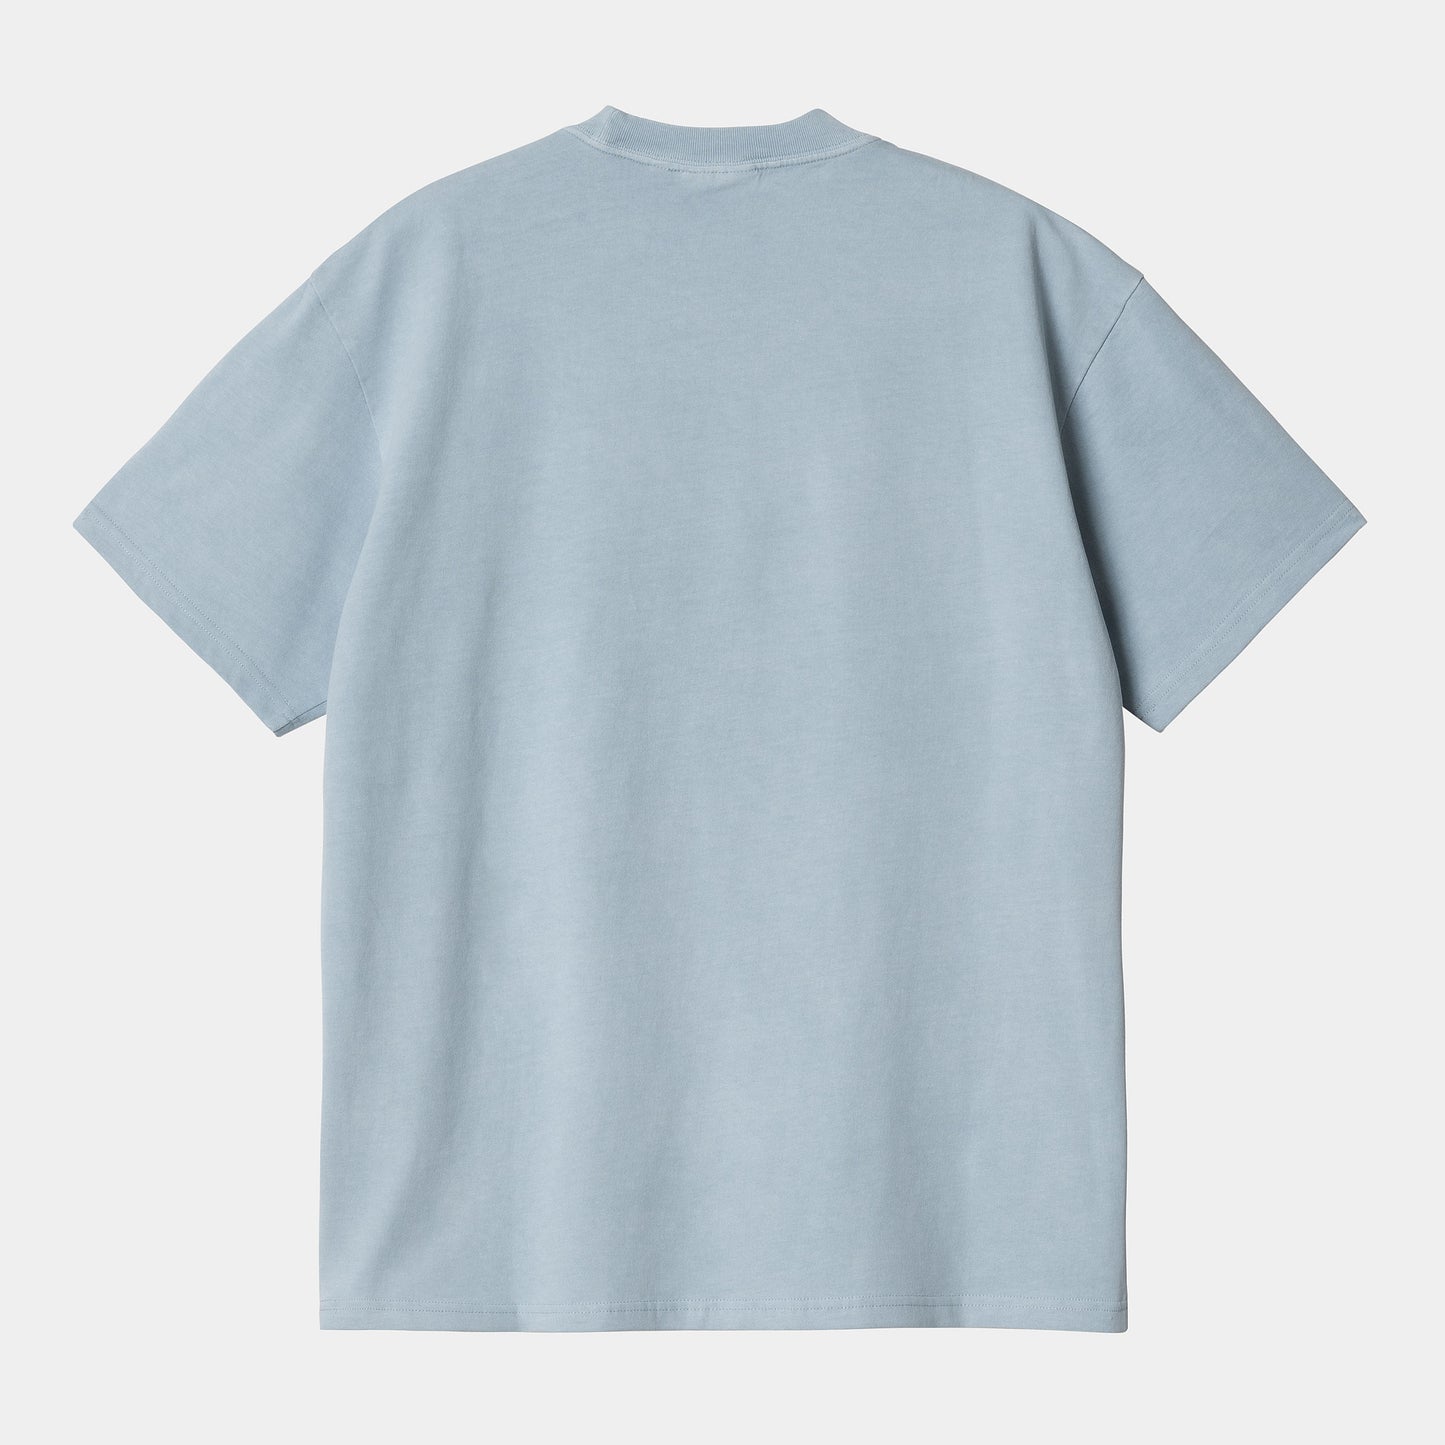 CARHARTT WIP S/S Duster Script T-Shirt - Misty Sky (garment dyed)